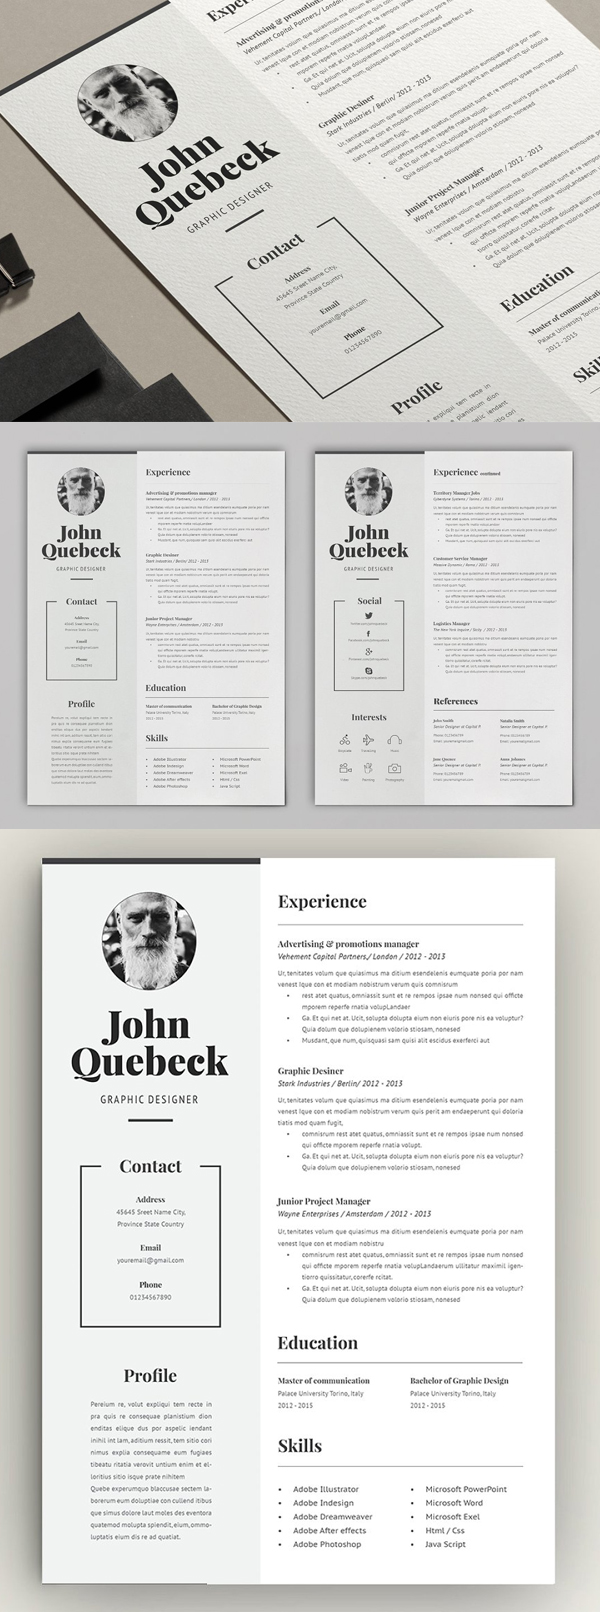 Resume John 2 Pages Resume